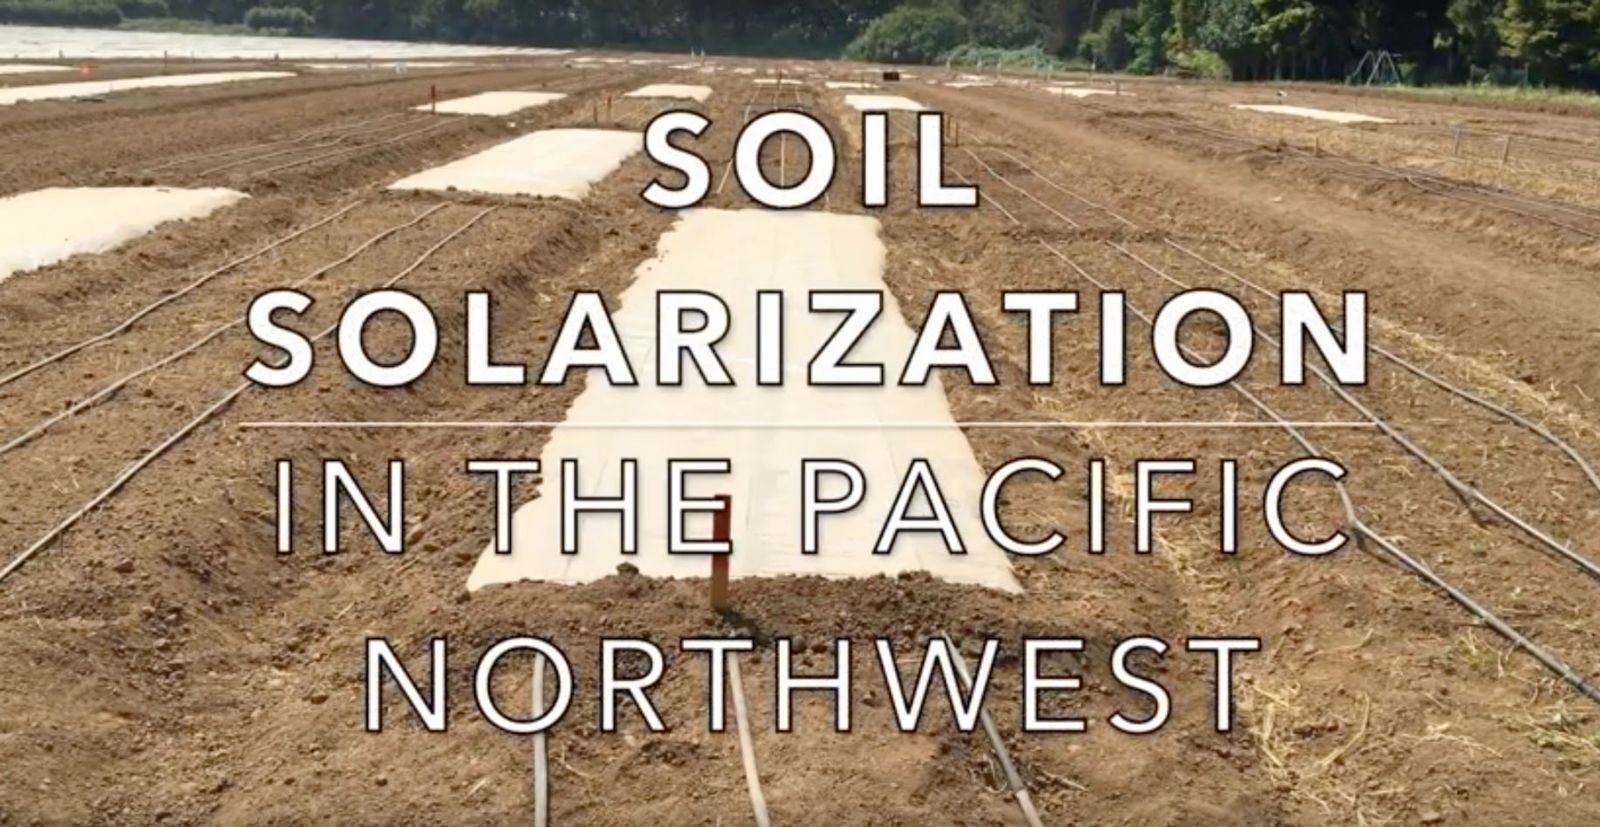 Soil solarization video